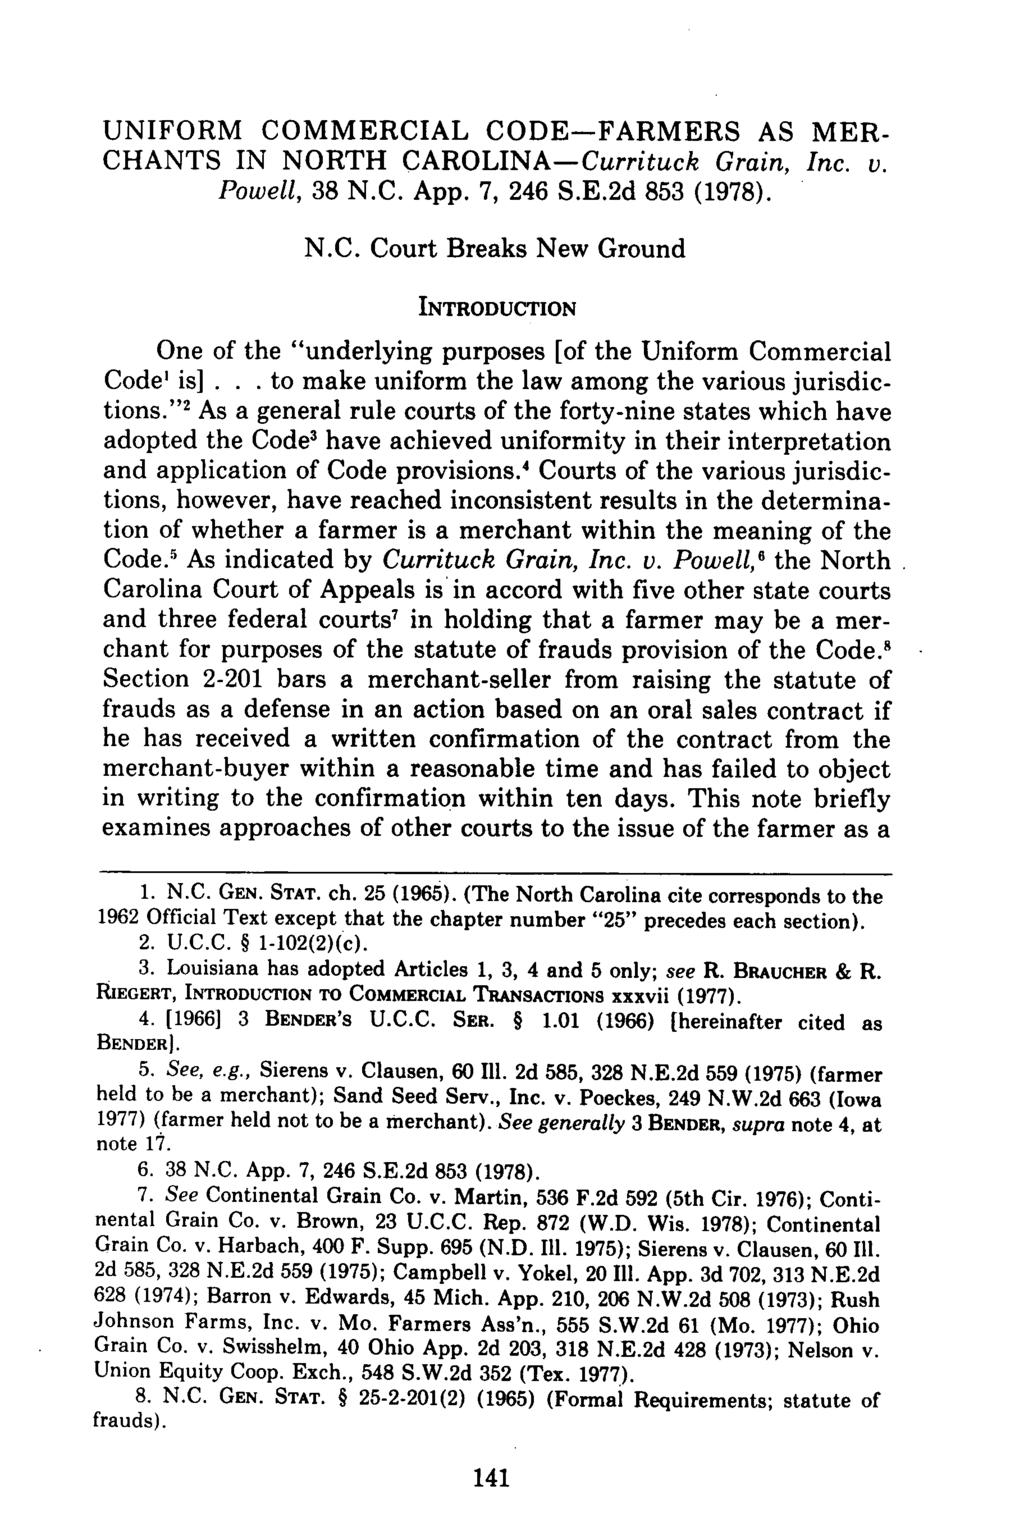 Massey: Uniform Commercial Code - Farmers as Merchants in North Carolina UNIFORM COMMERCIAL CODE-FARMERS AS MER- CHANTS IN NORTH CAROLINA-Currituck Grain, Inc. v. Powell, 38 N.C. App. 7, 246 S.E.2d 853 (1978).